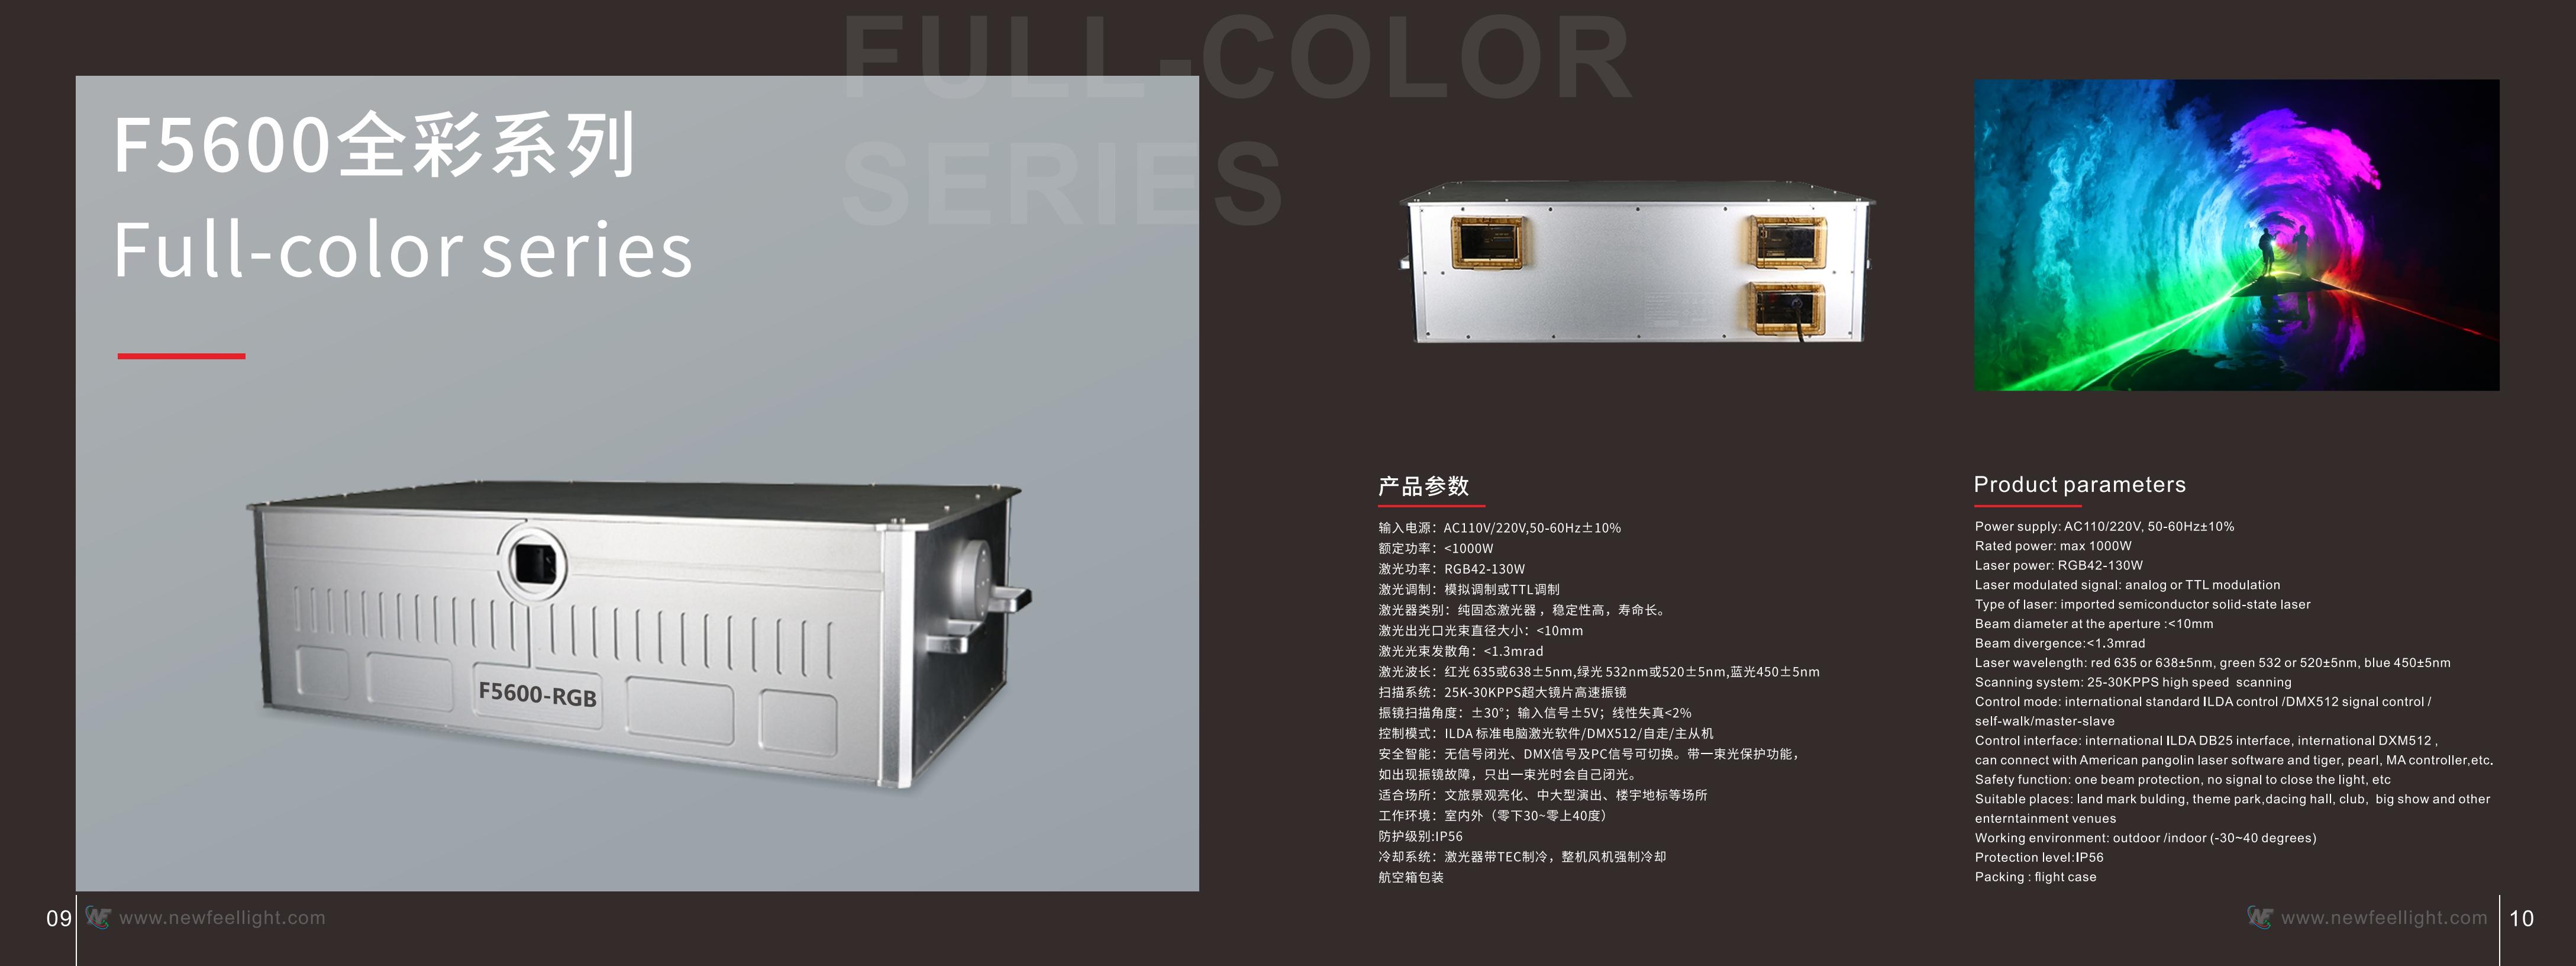 NewFeel Laser Light Product Catalogue_06.jpg